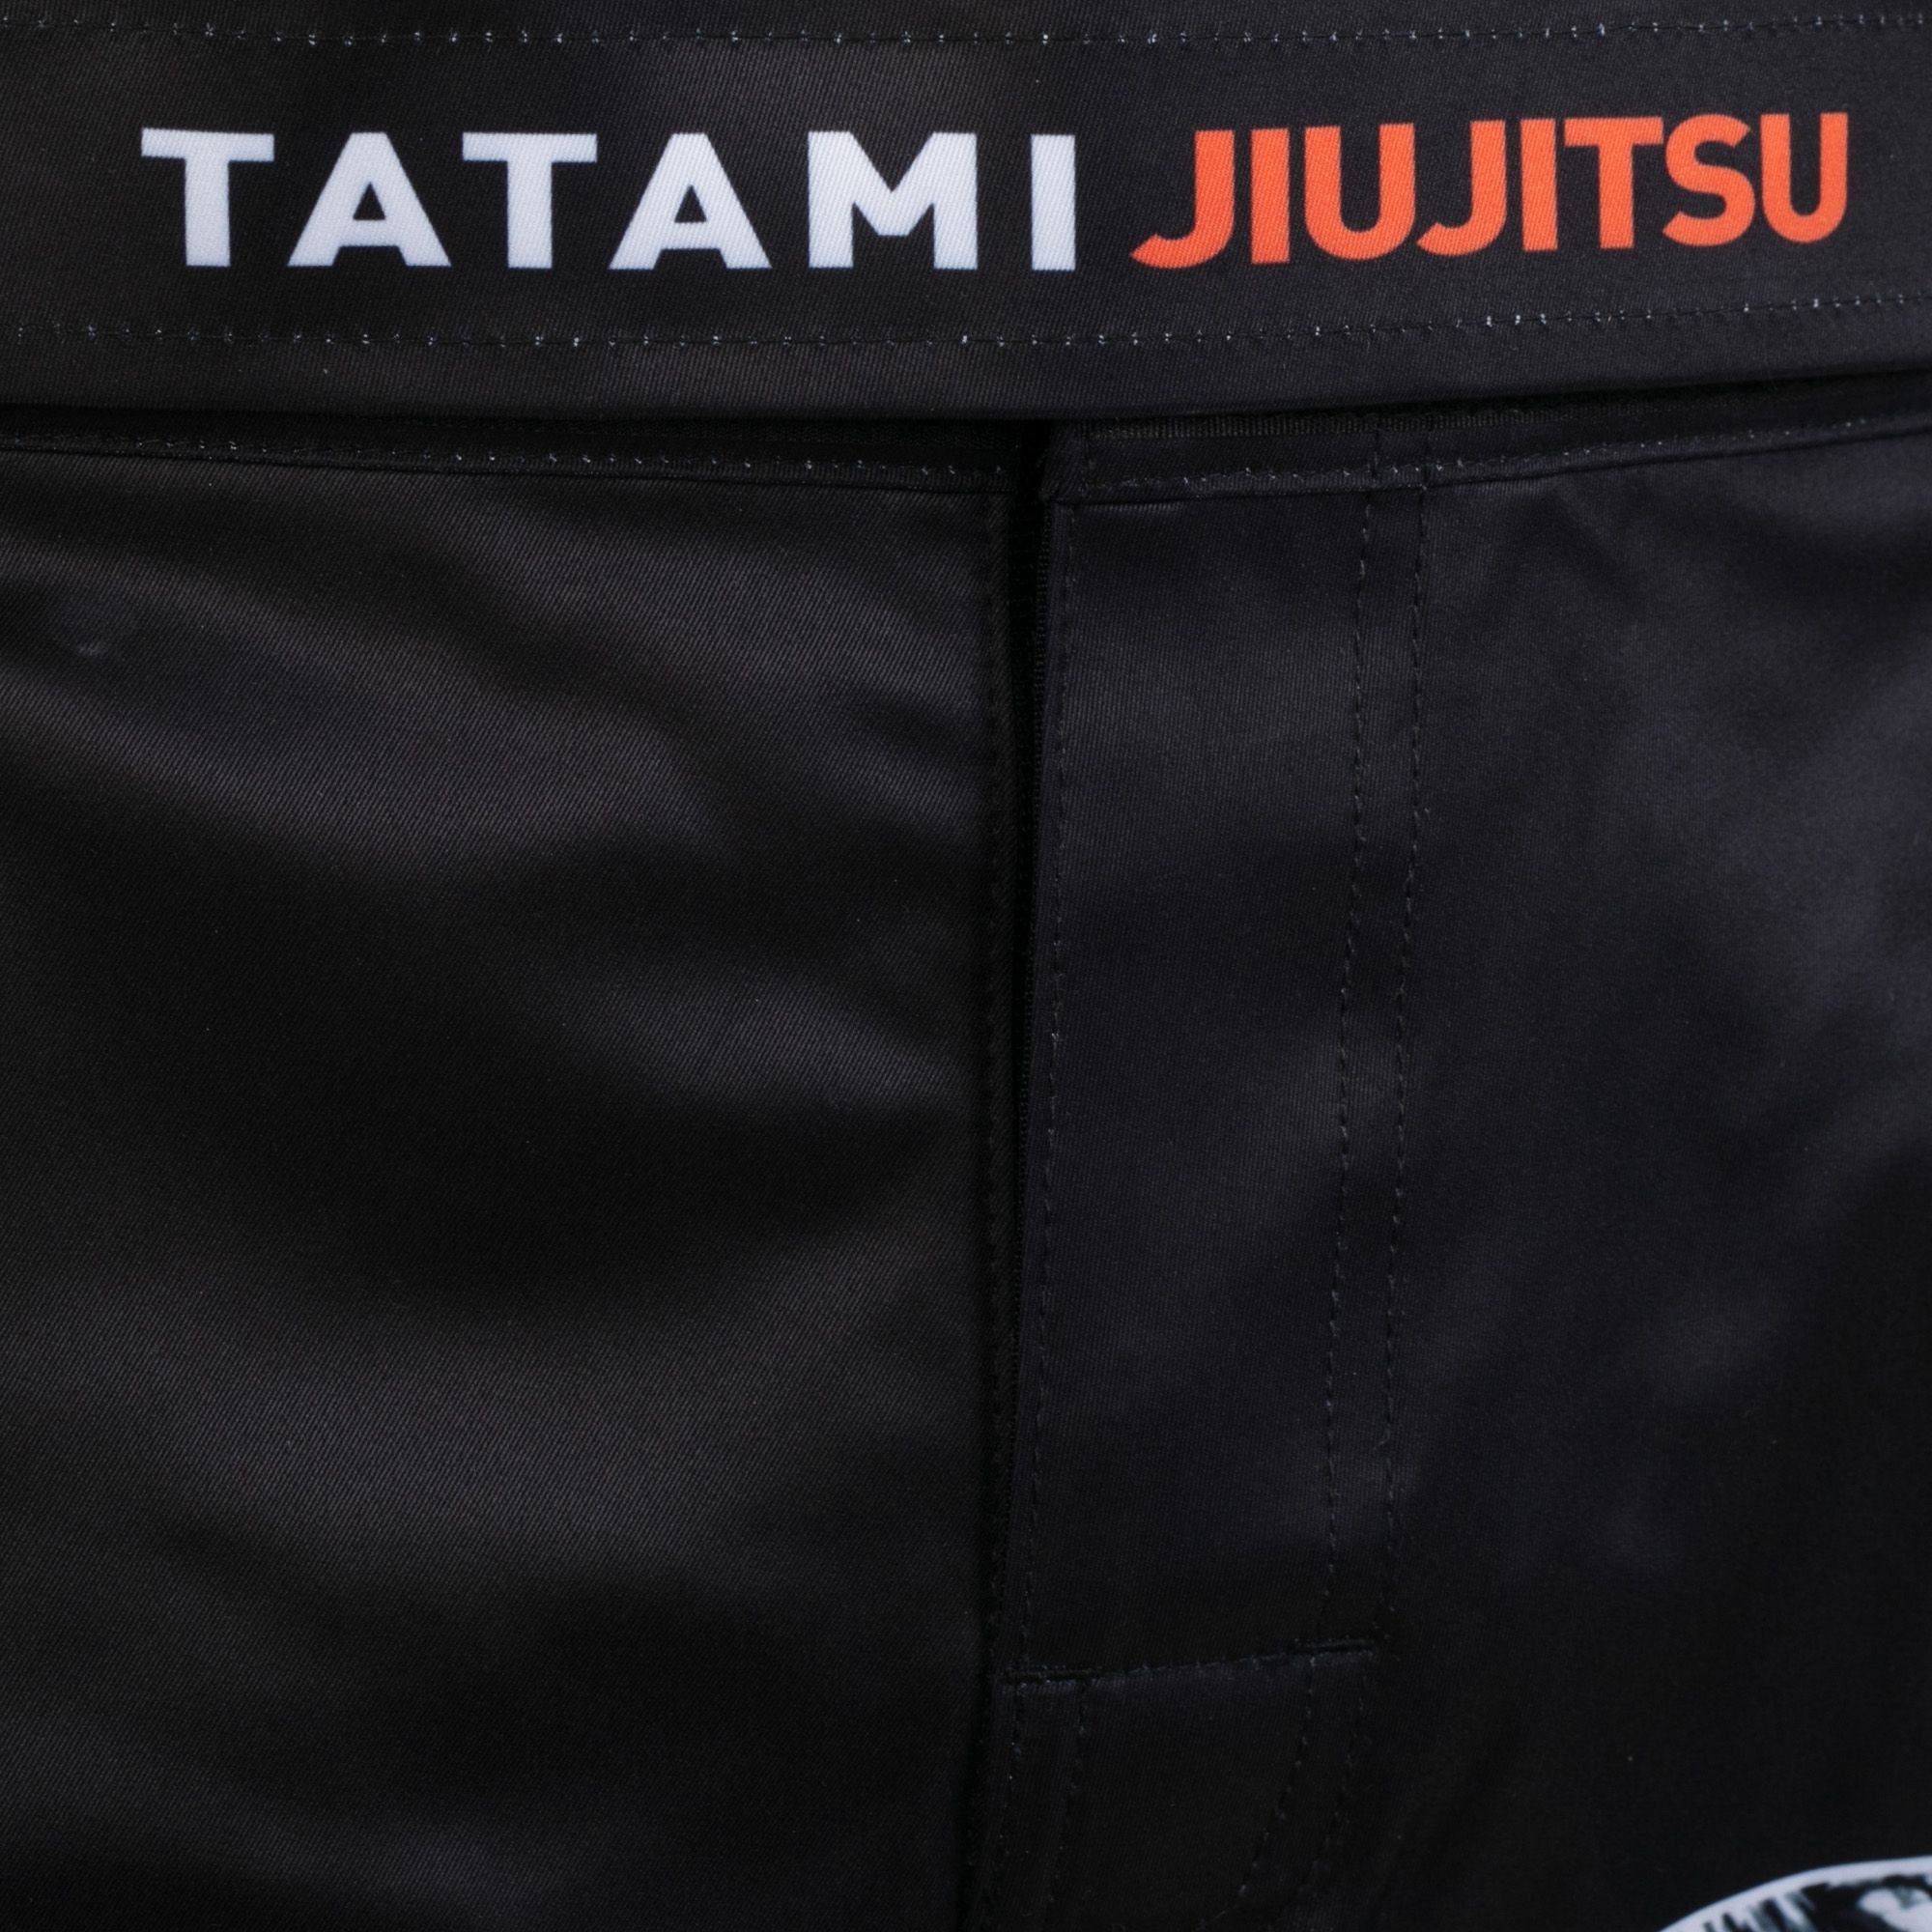 Tatami Tropic Black Grappling Shorts BJJ Nogi